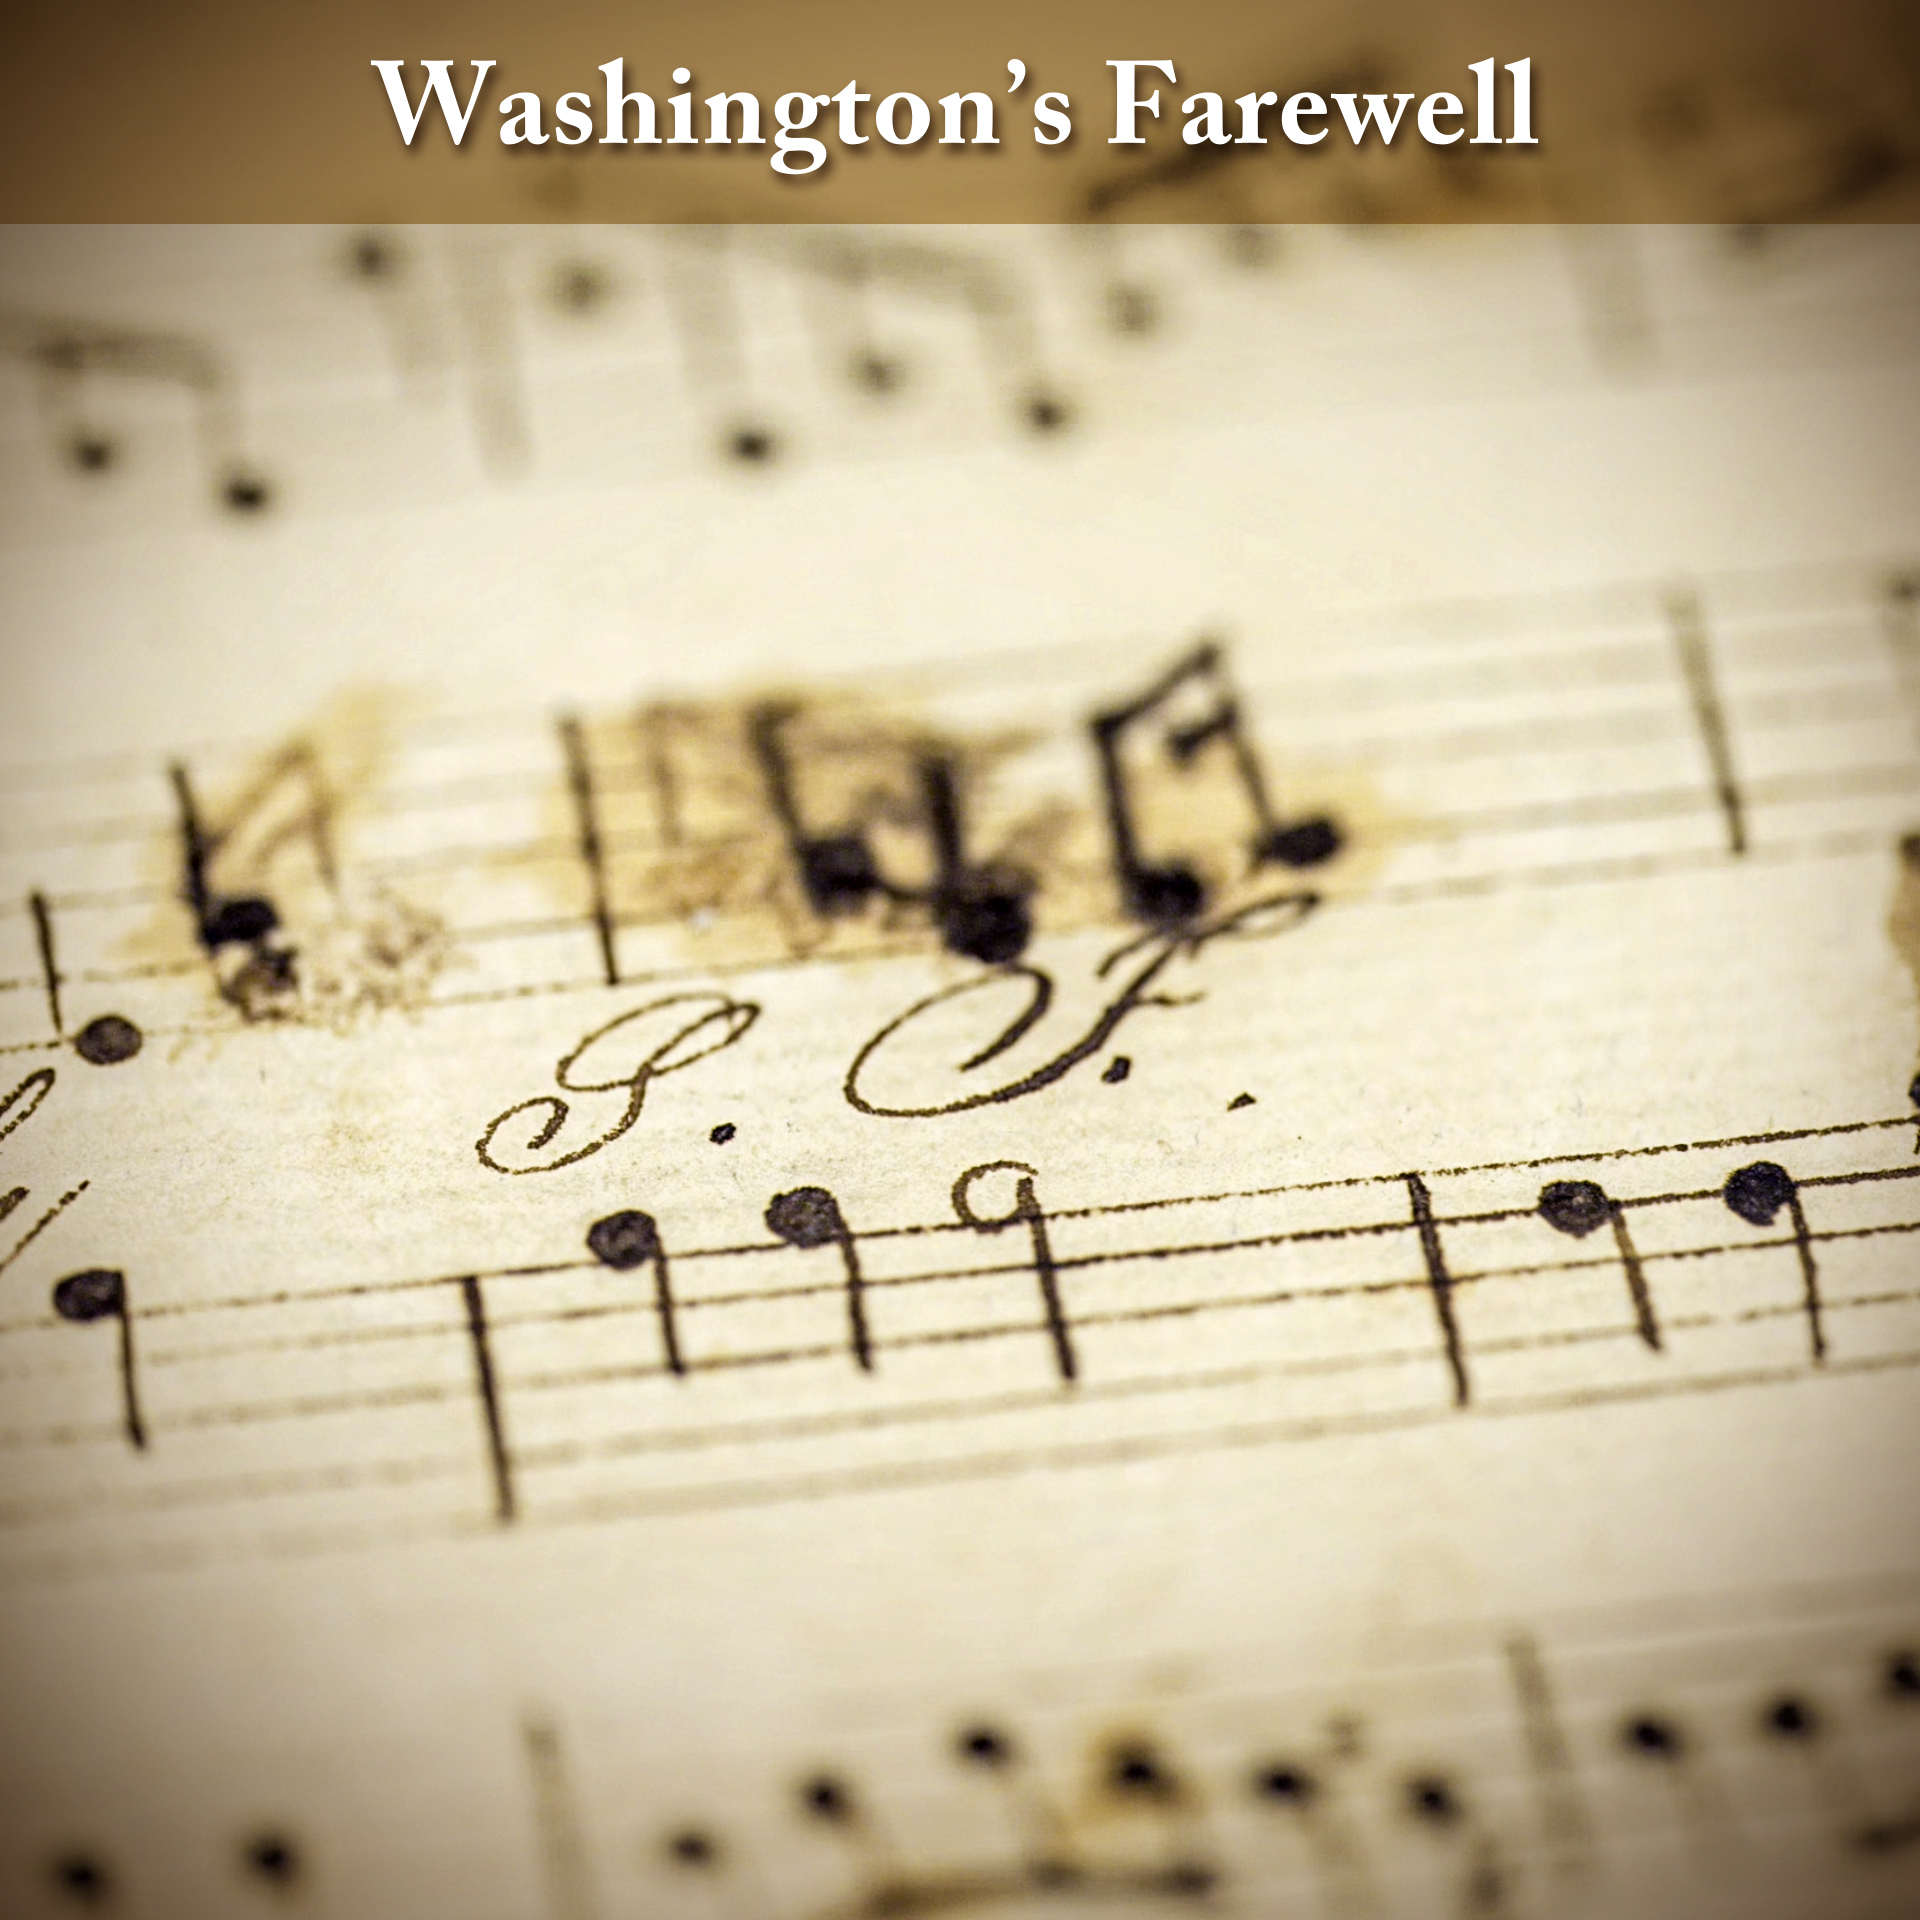 BONUS: The Music of Sawney Freeman "Washington's Farewell"